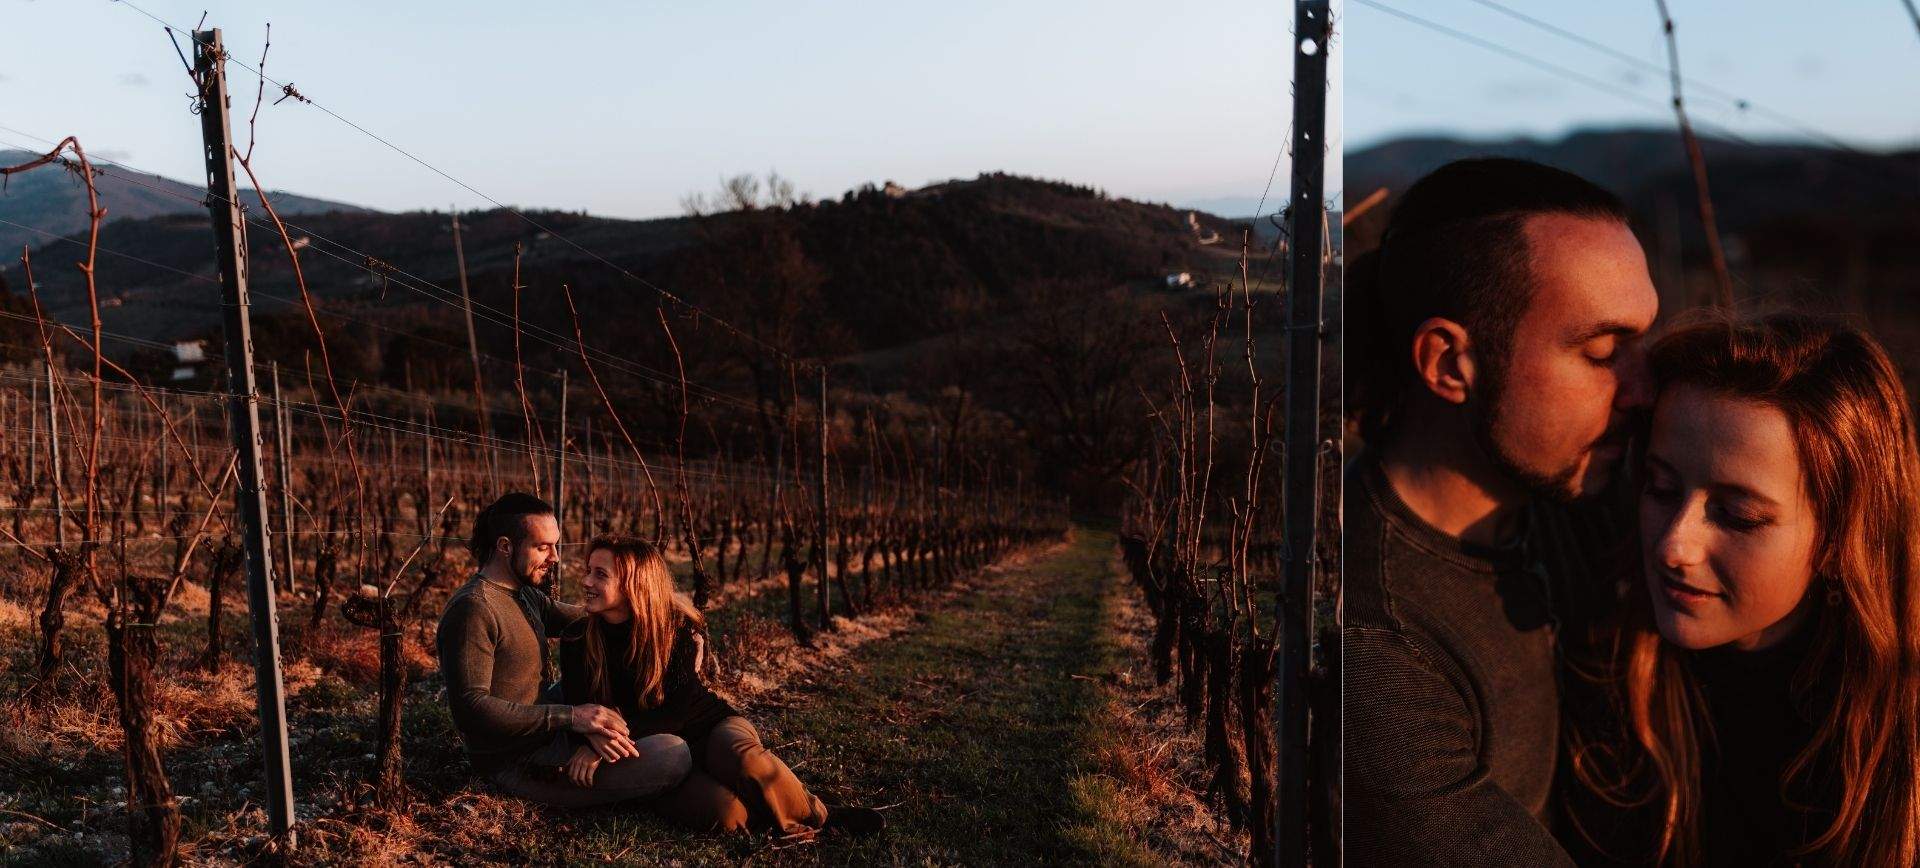 tuscany photoshoot at winery - winery photoshoot in Europe